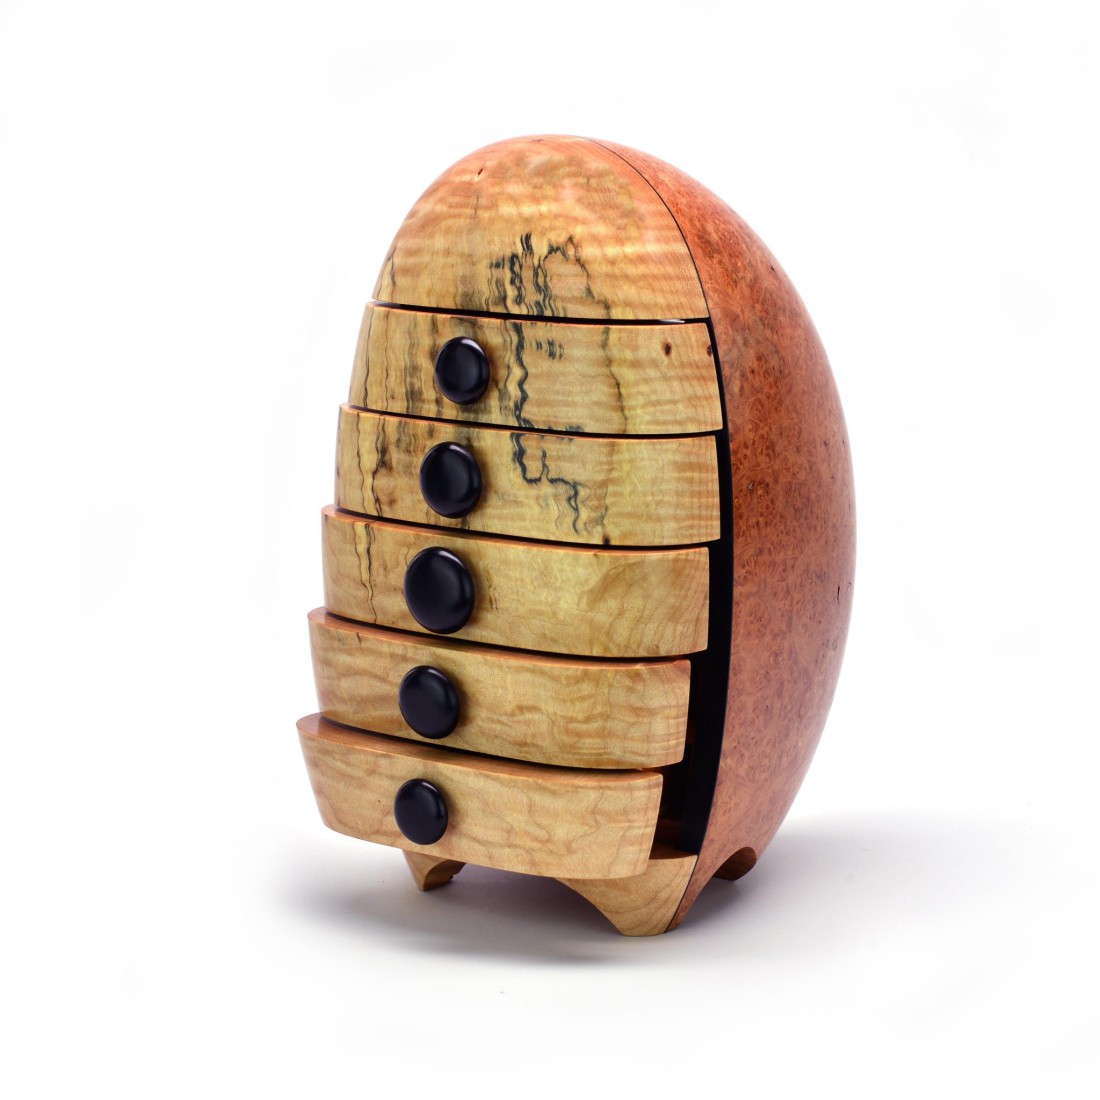 "Wooden Box" by Ray Jones